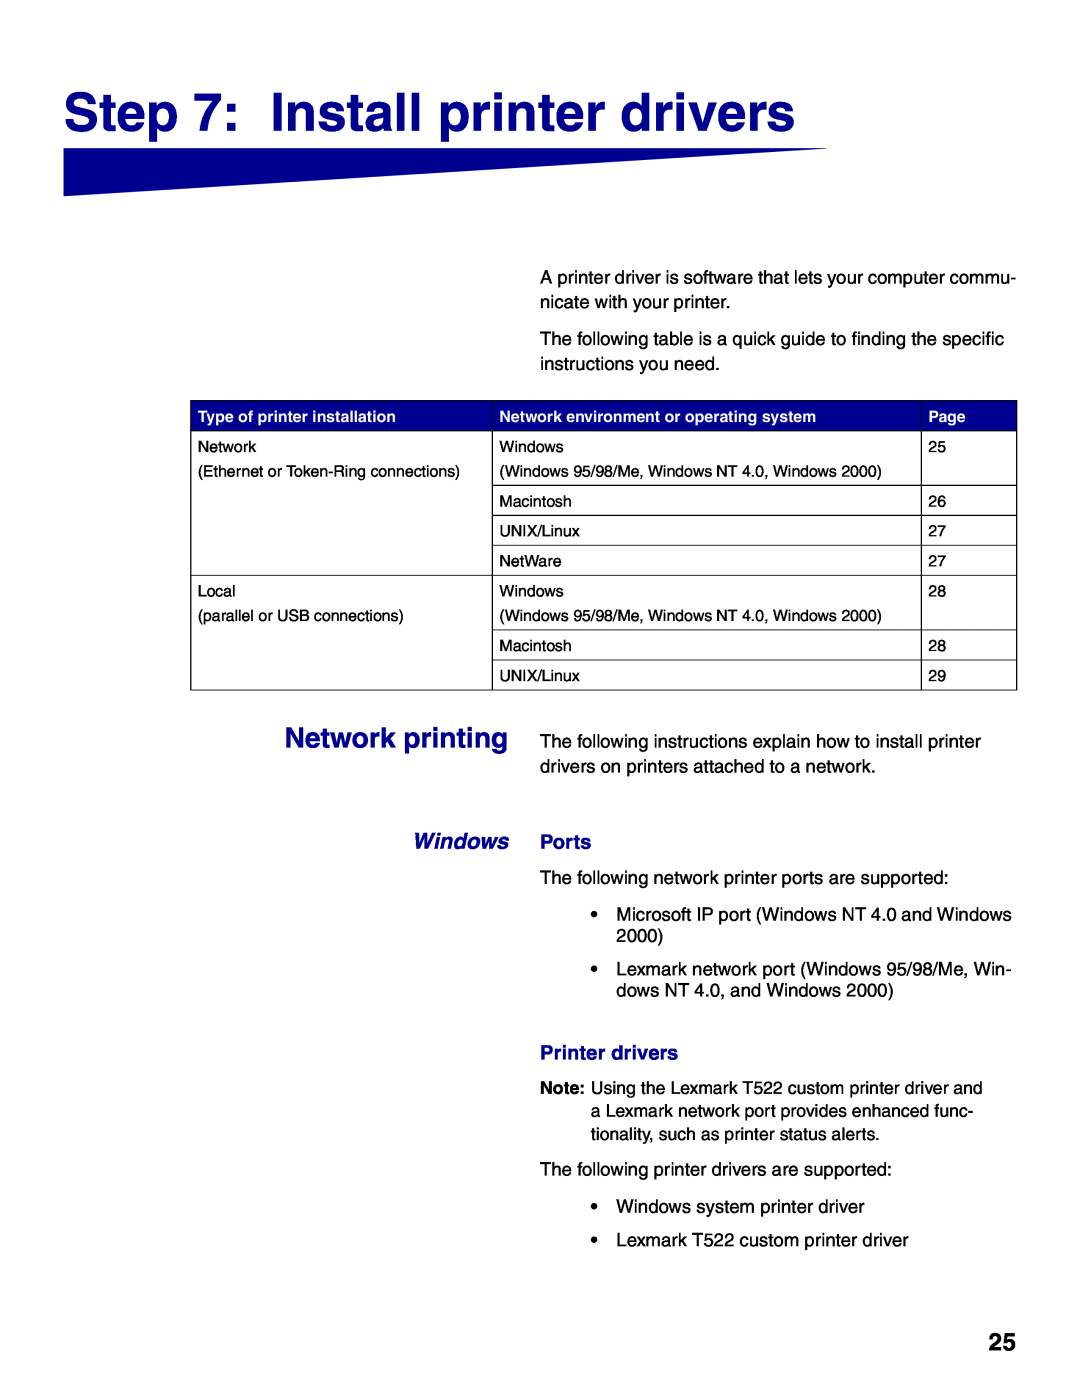 Lexmark 522 setup guide Install printer drivers, Printer drivers, Windows Ports 